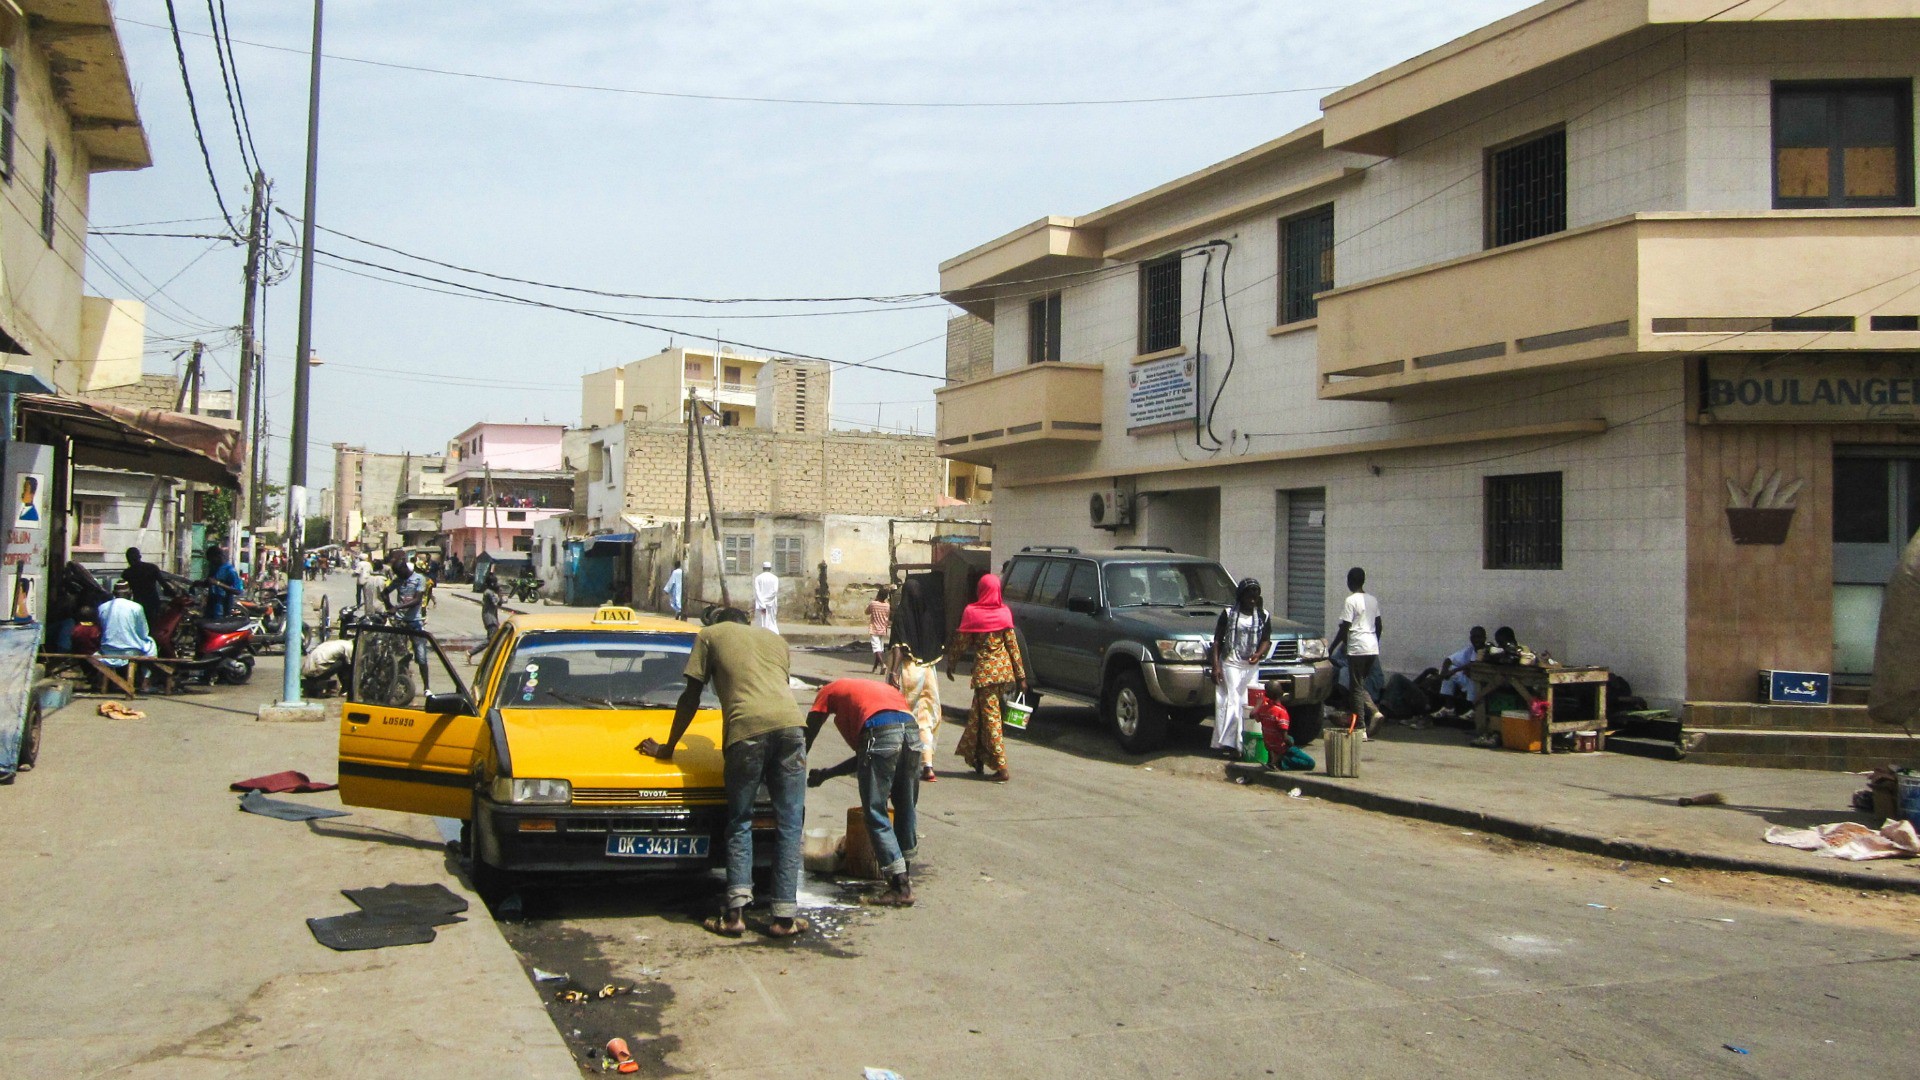 Dakar, au Sénégal. (Photo: Flickr/jbdodane/CC BY-NC 2.0)